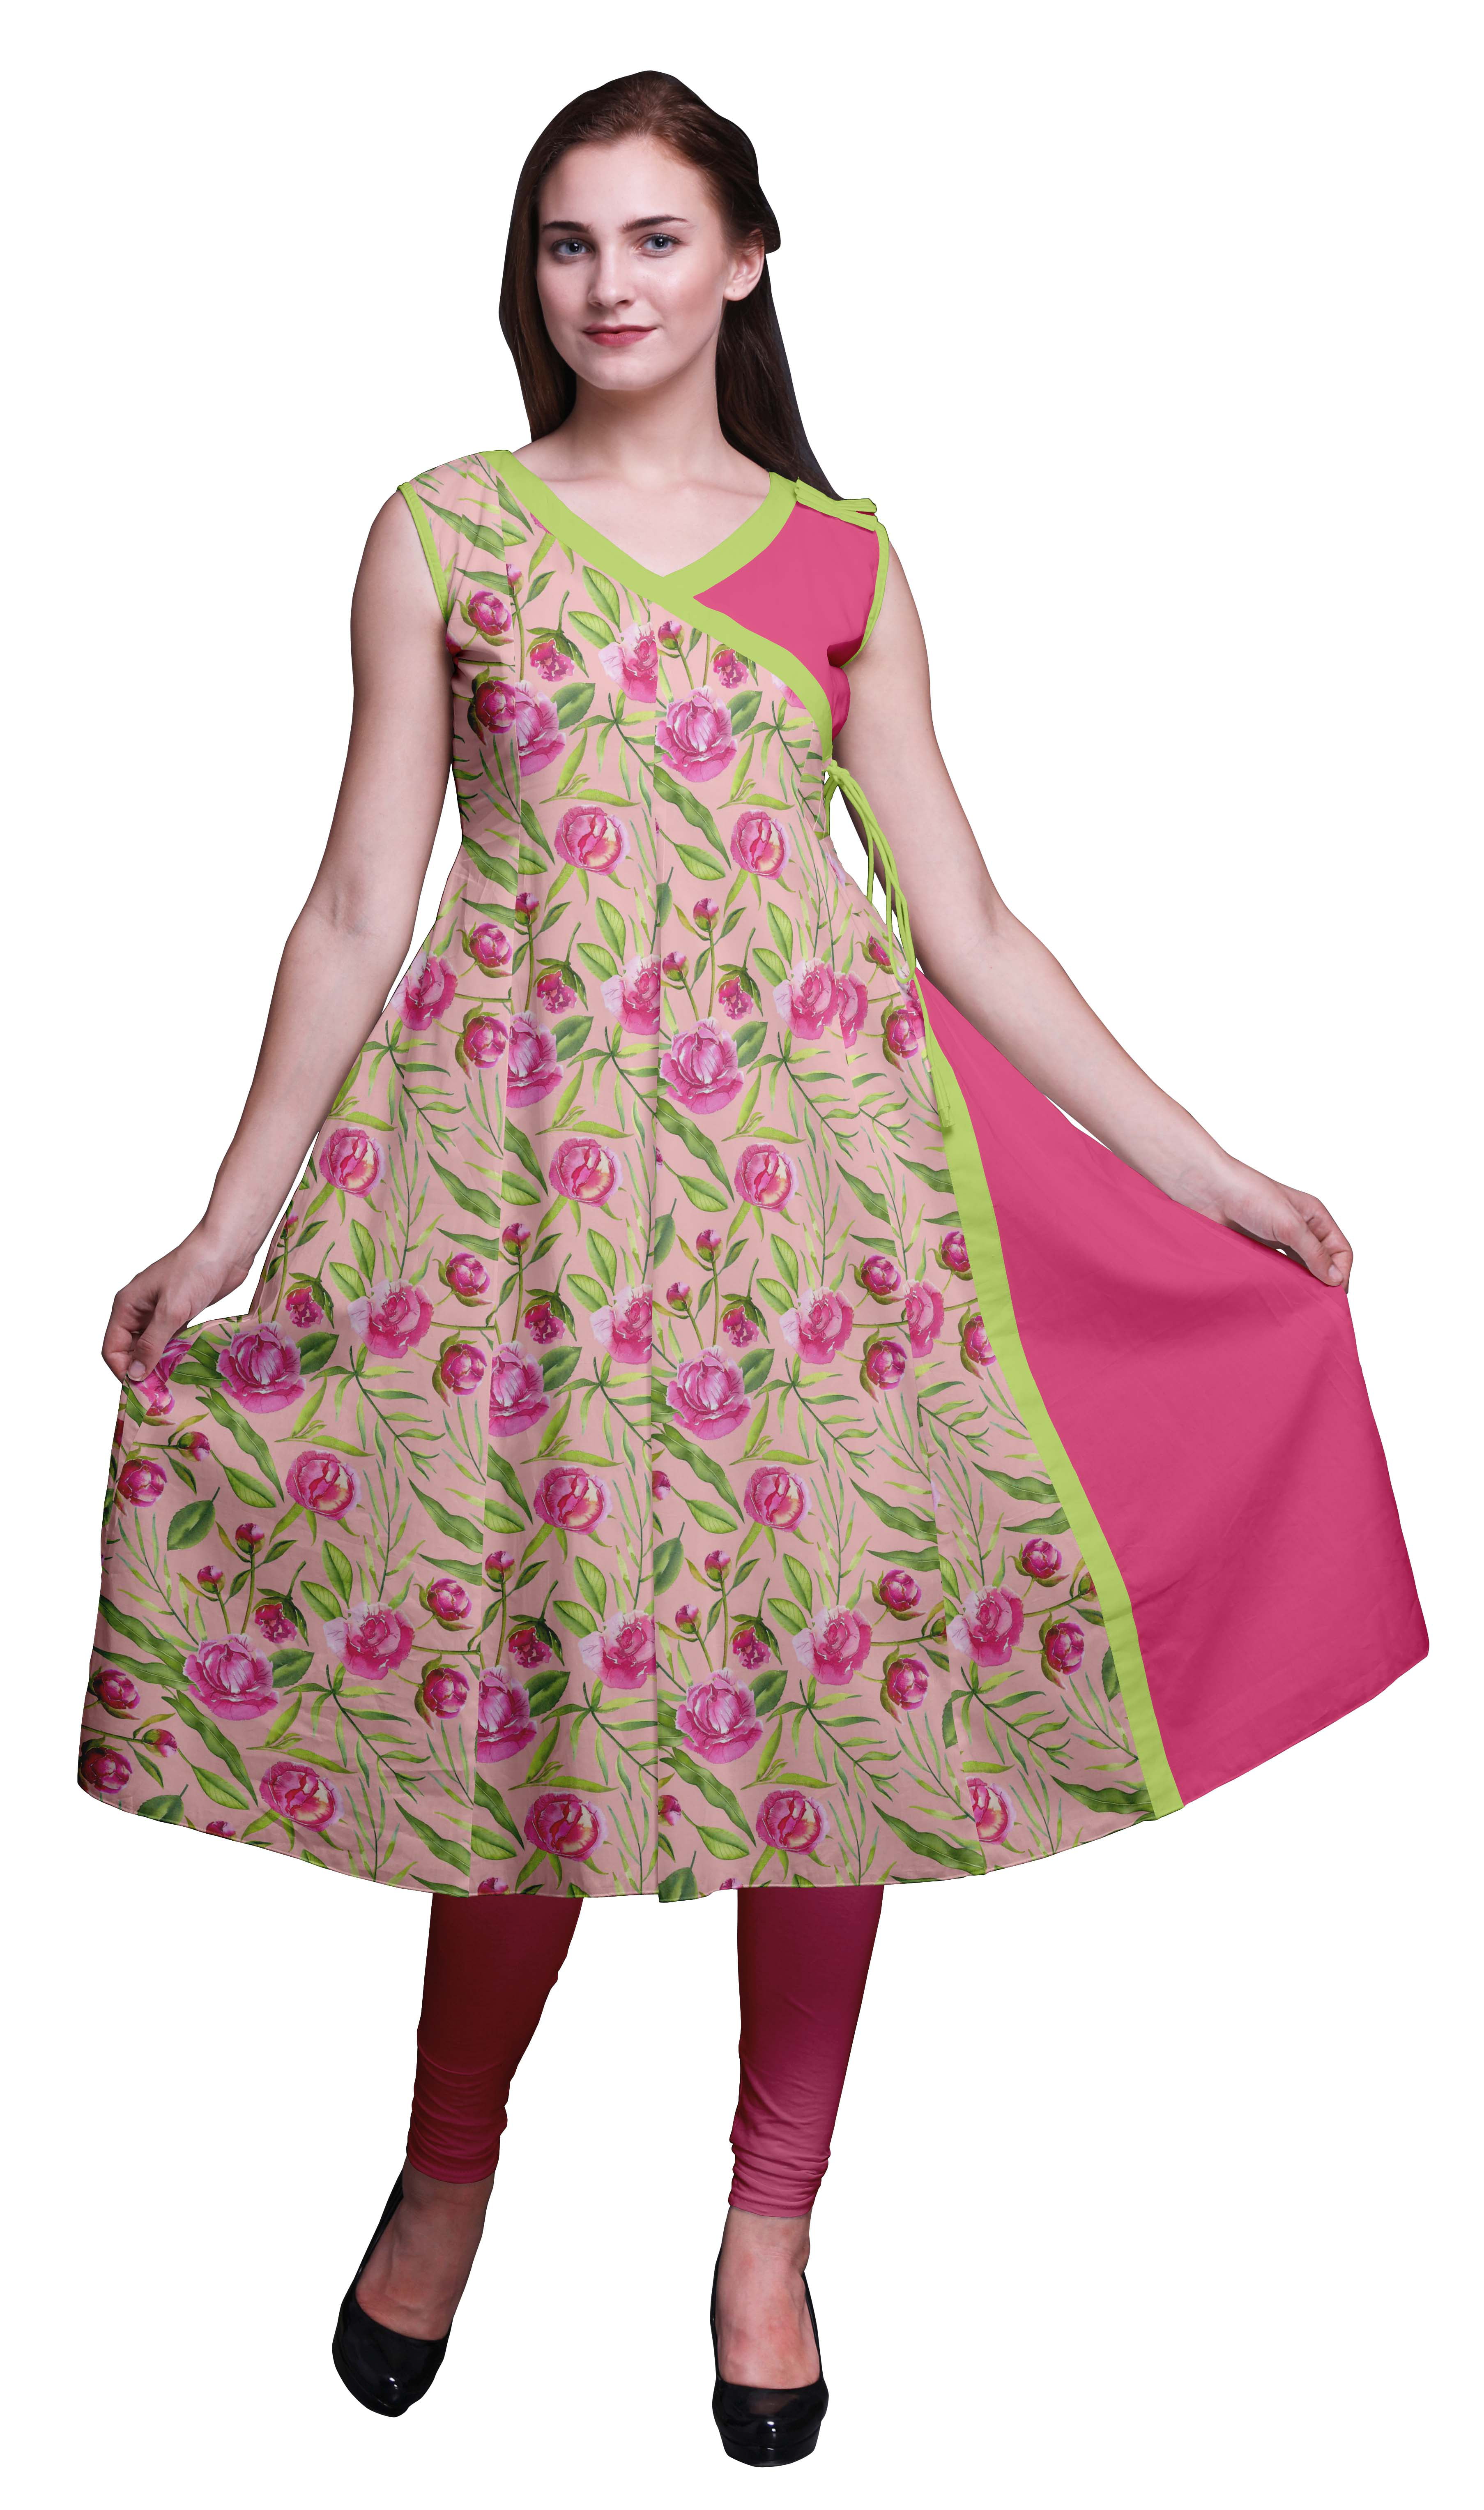 Details about   Indian Women Kurta Kurti Ethnic Designer Dress Top Tunic St Patrick's Day Offer